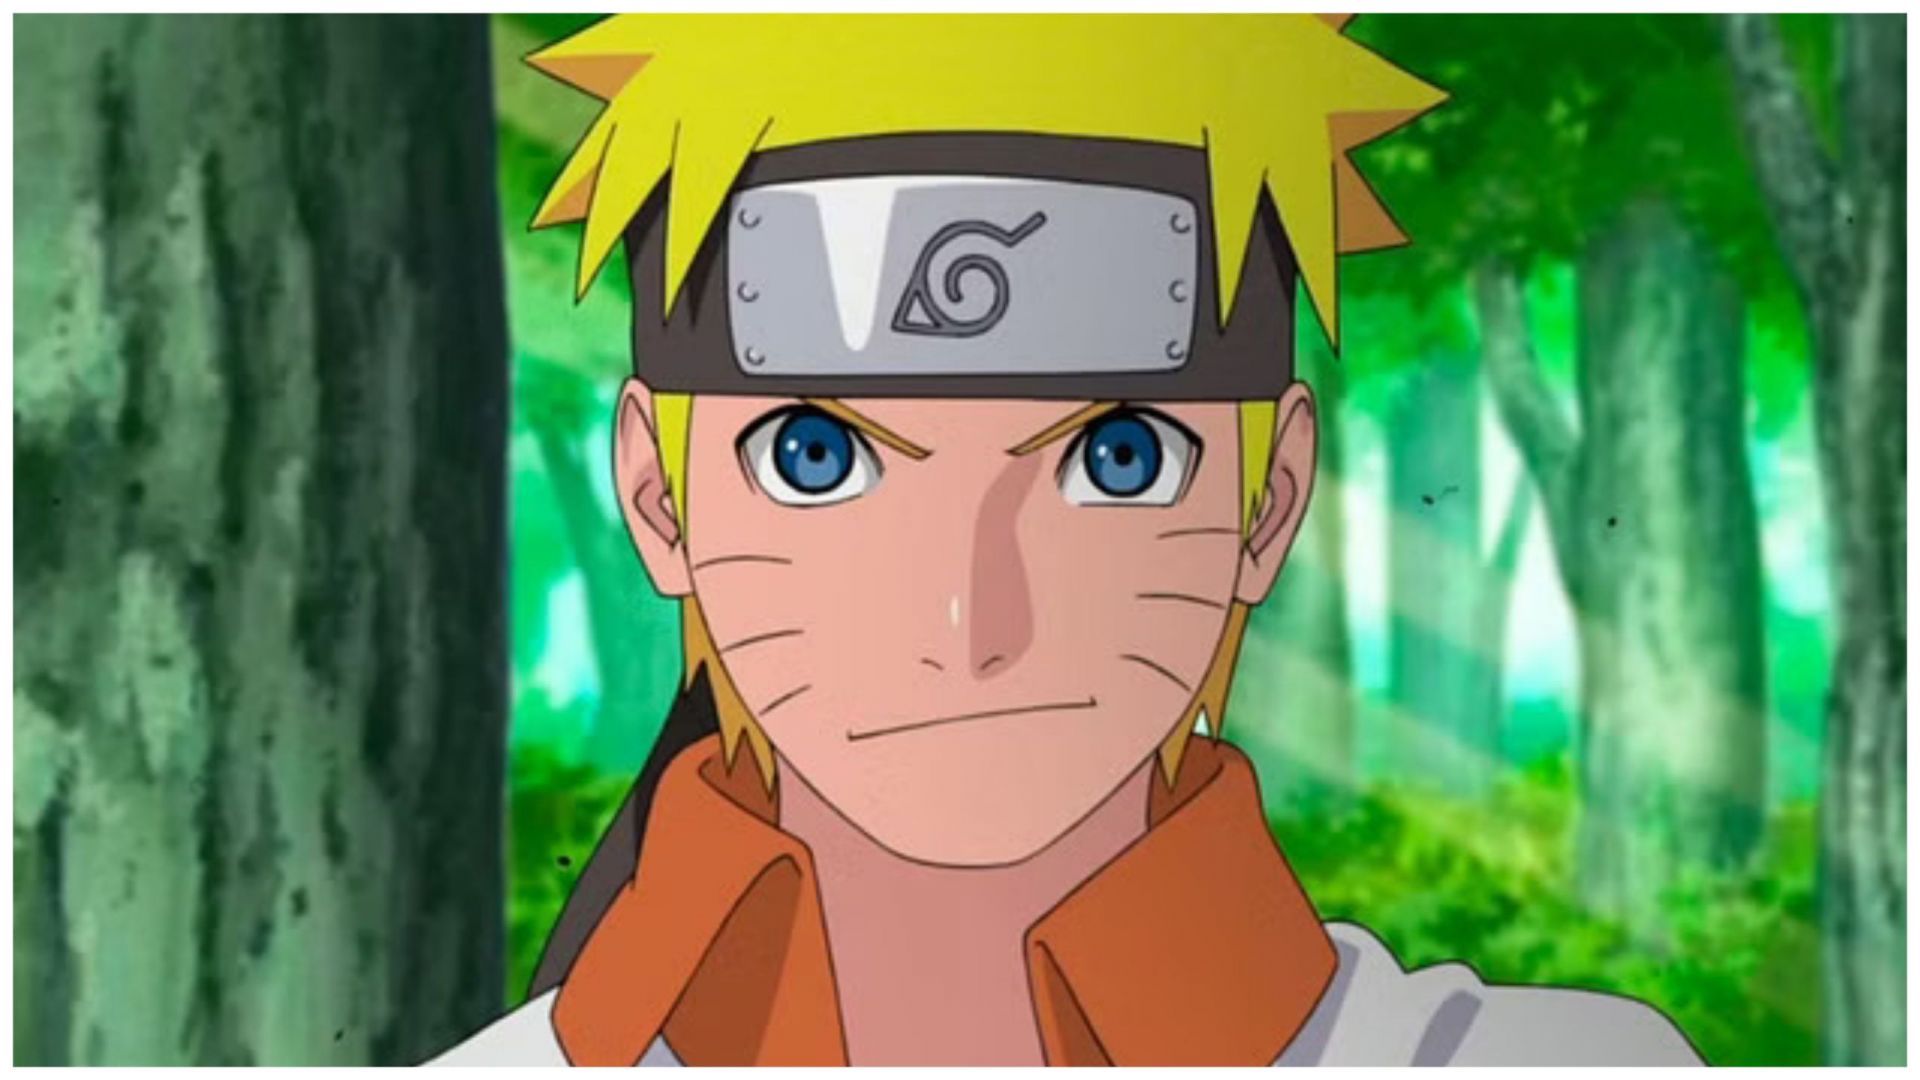 Revolutionary anime character from Naruto series (Image via Studio Pierrot)